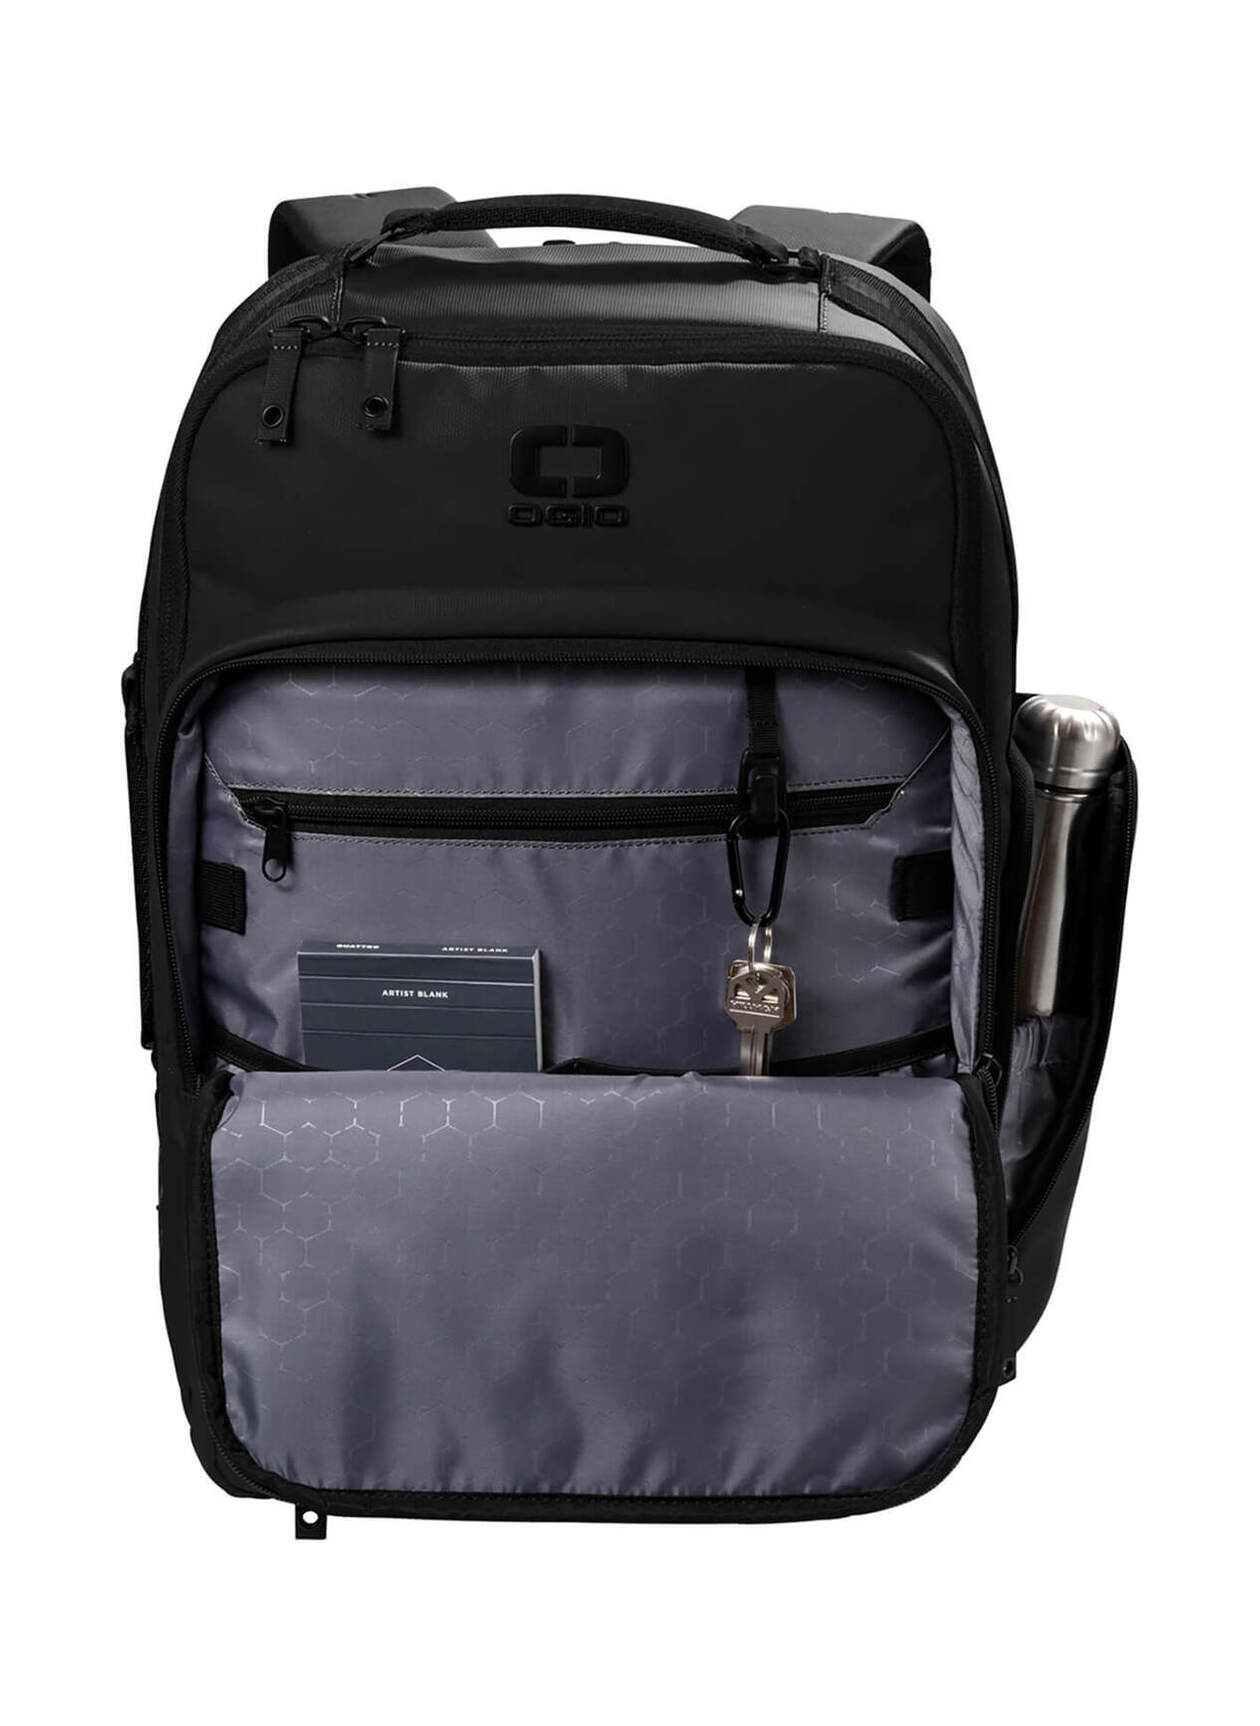 OGIO Blacktop Commuter XL Backpack, 51% OFF